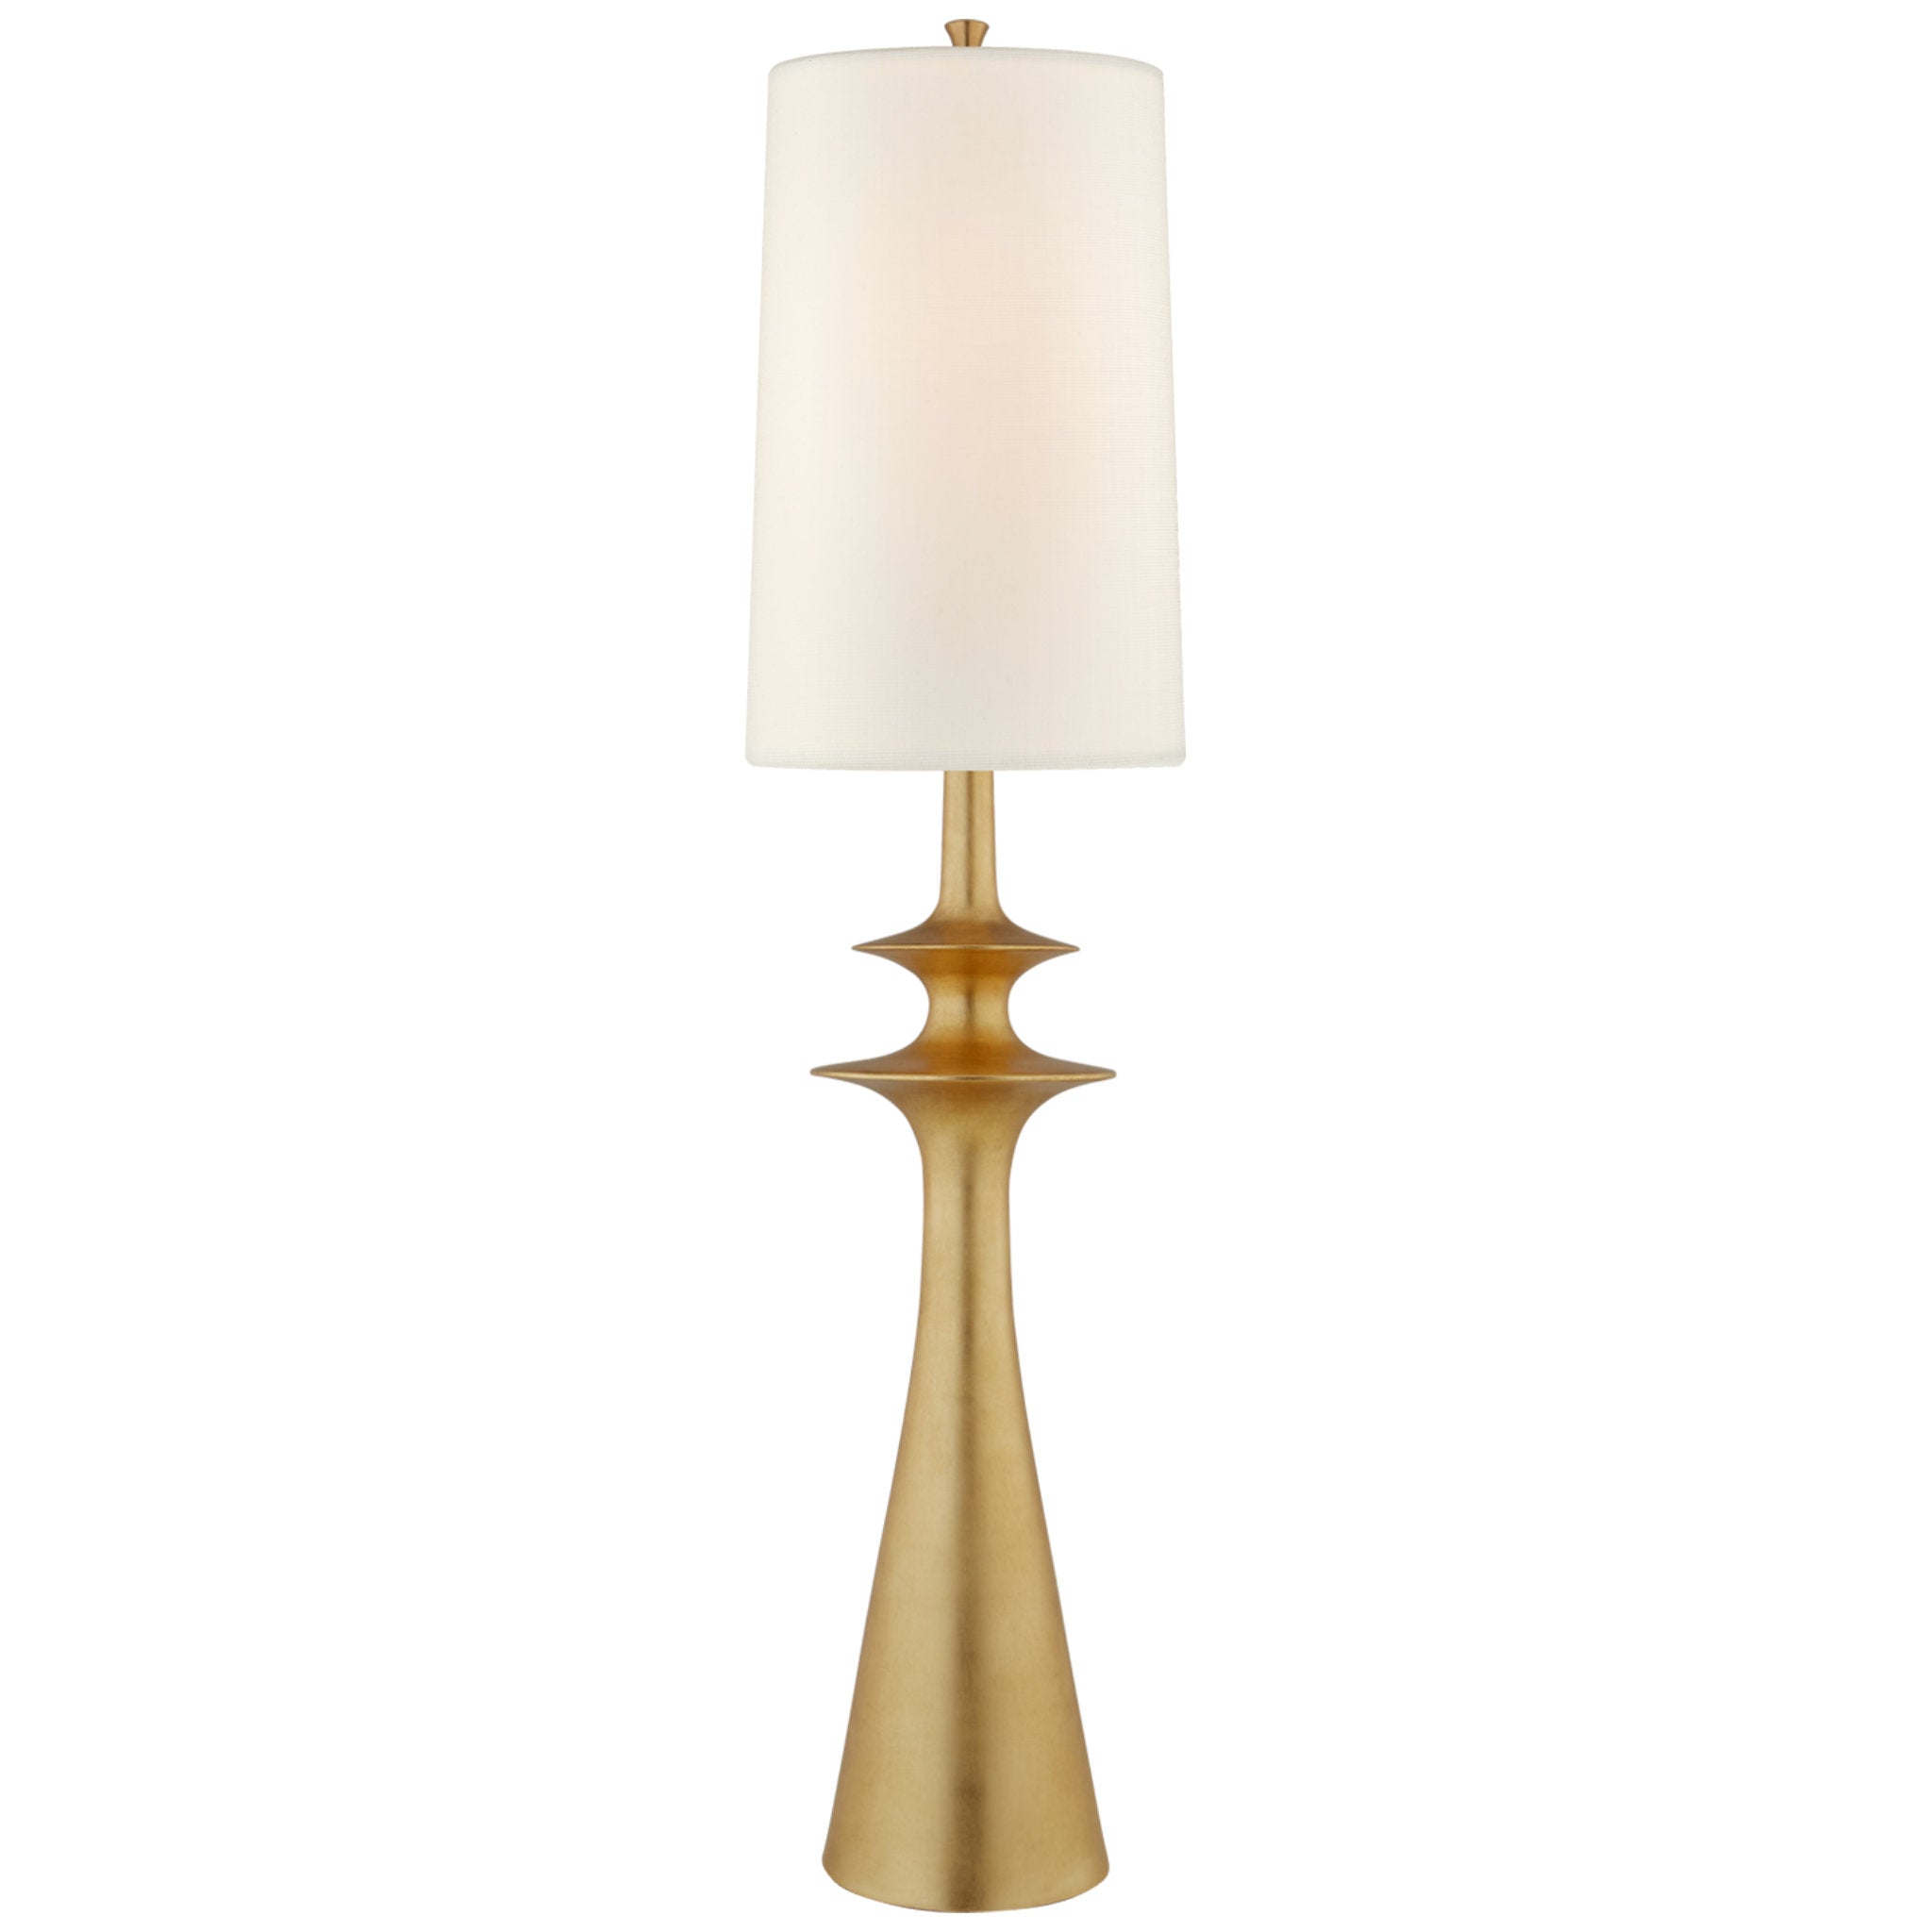 AERIN Lakmos Floor Lamp in Gild with Linen Shade